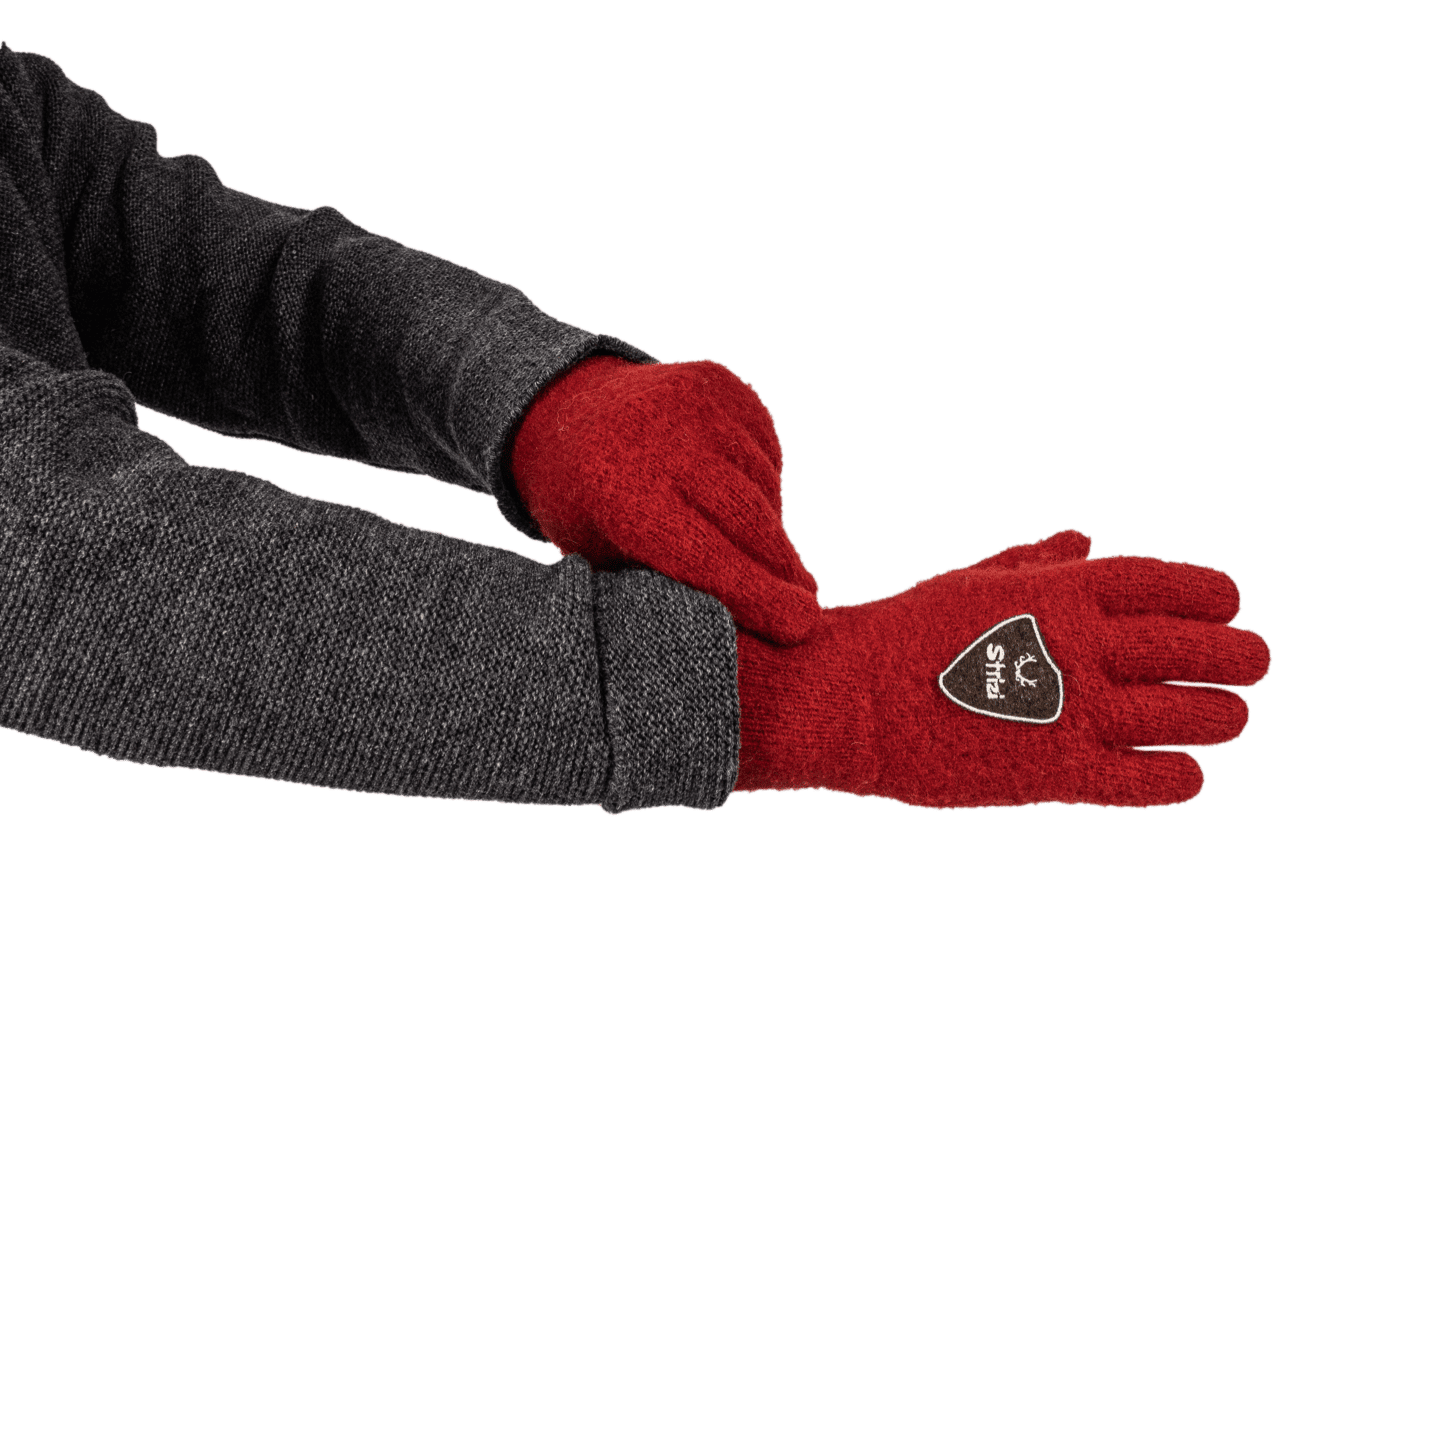 Strizi Handschuh Fingerling rot 3 - Strizi Glove red